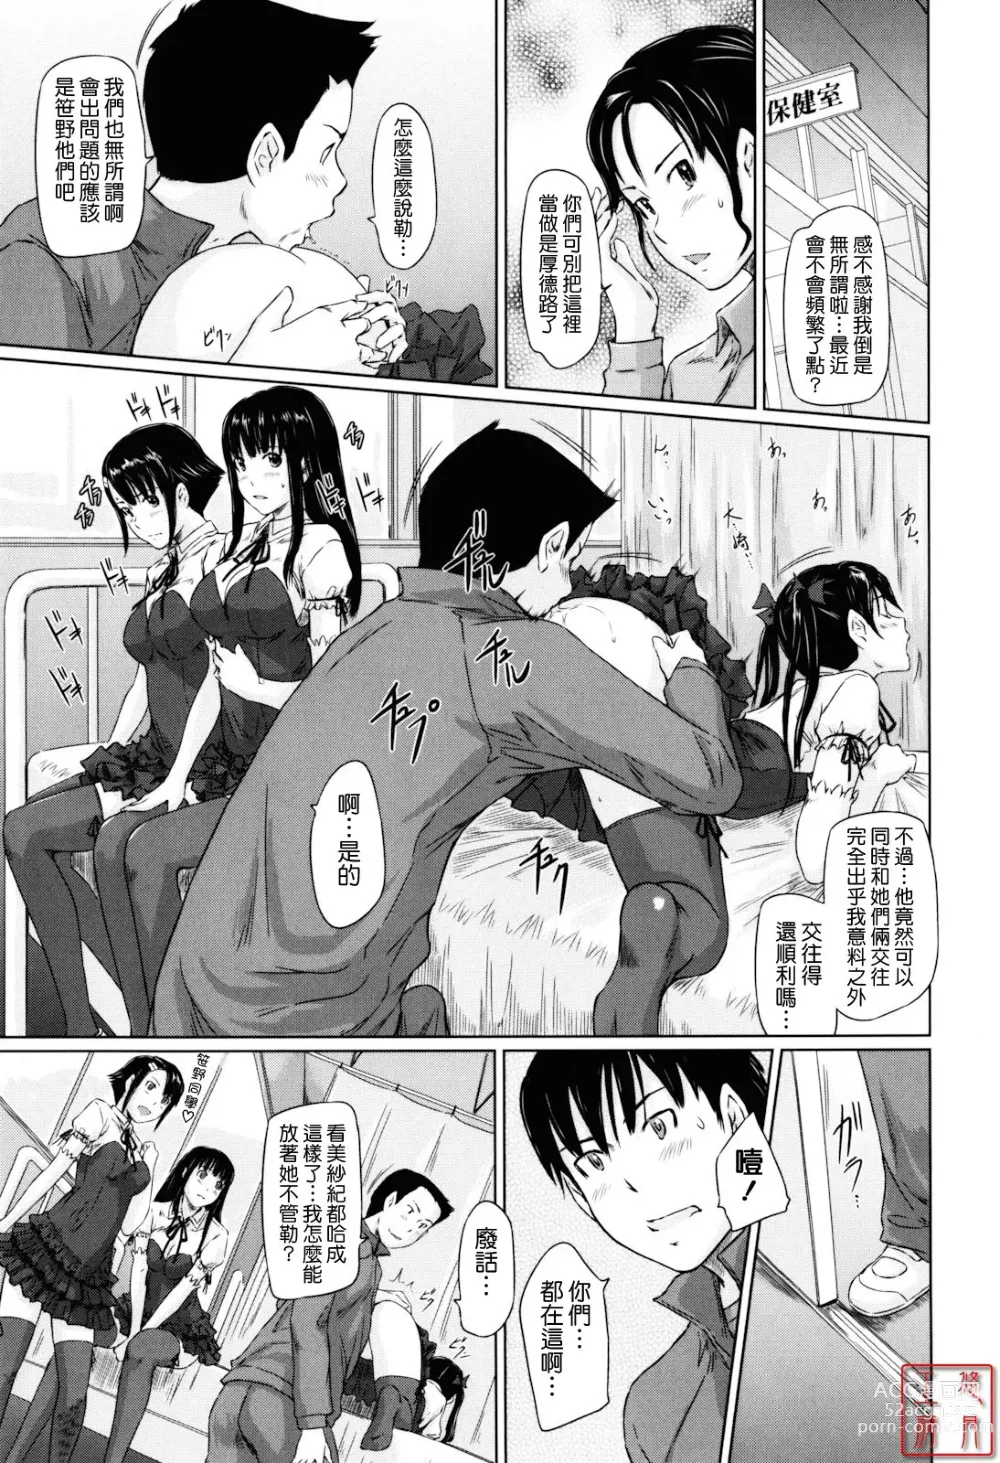 Page 219 of manga Sweethearts (decensored)